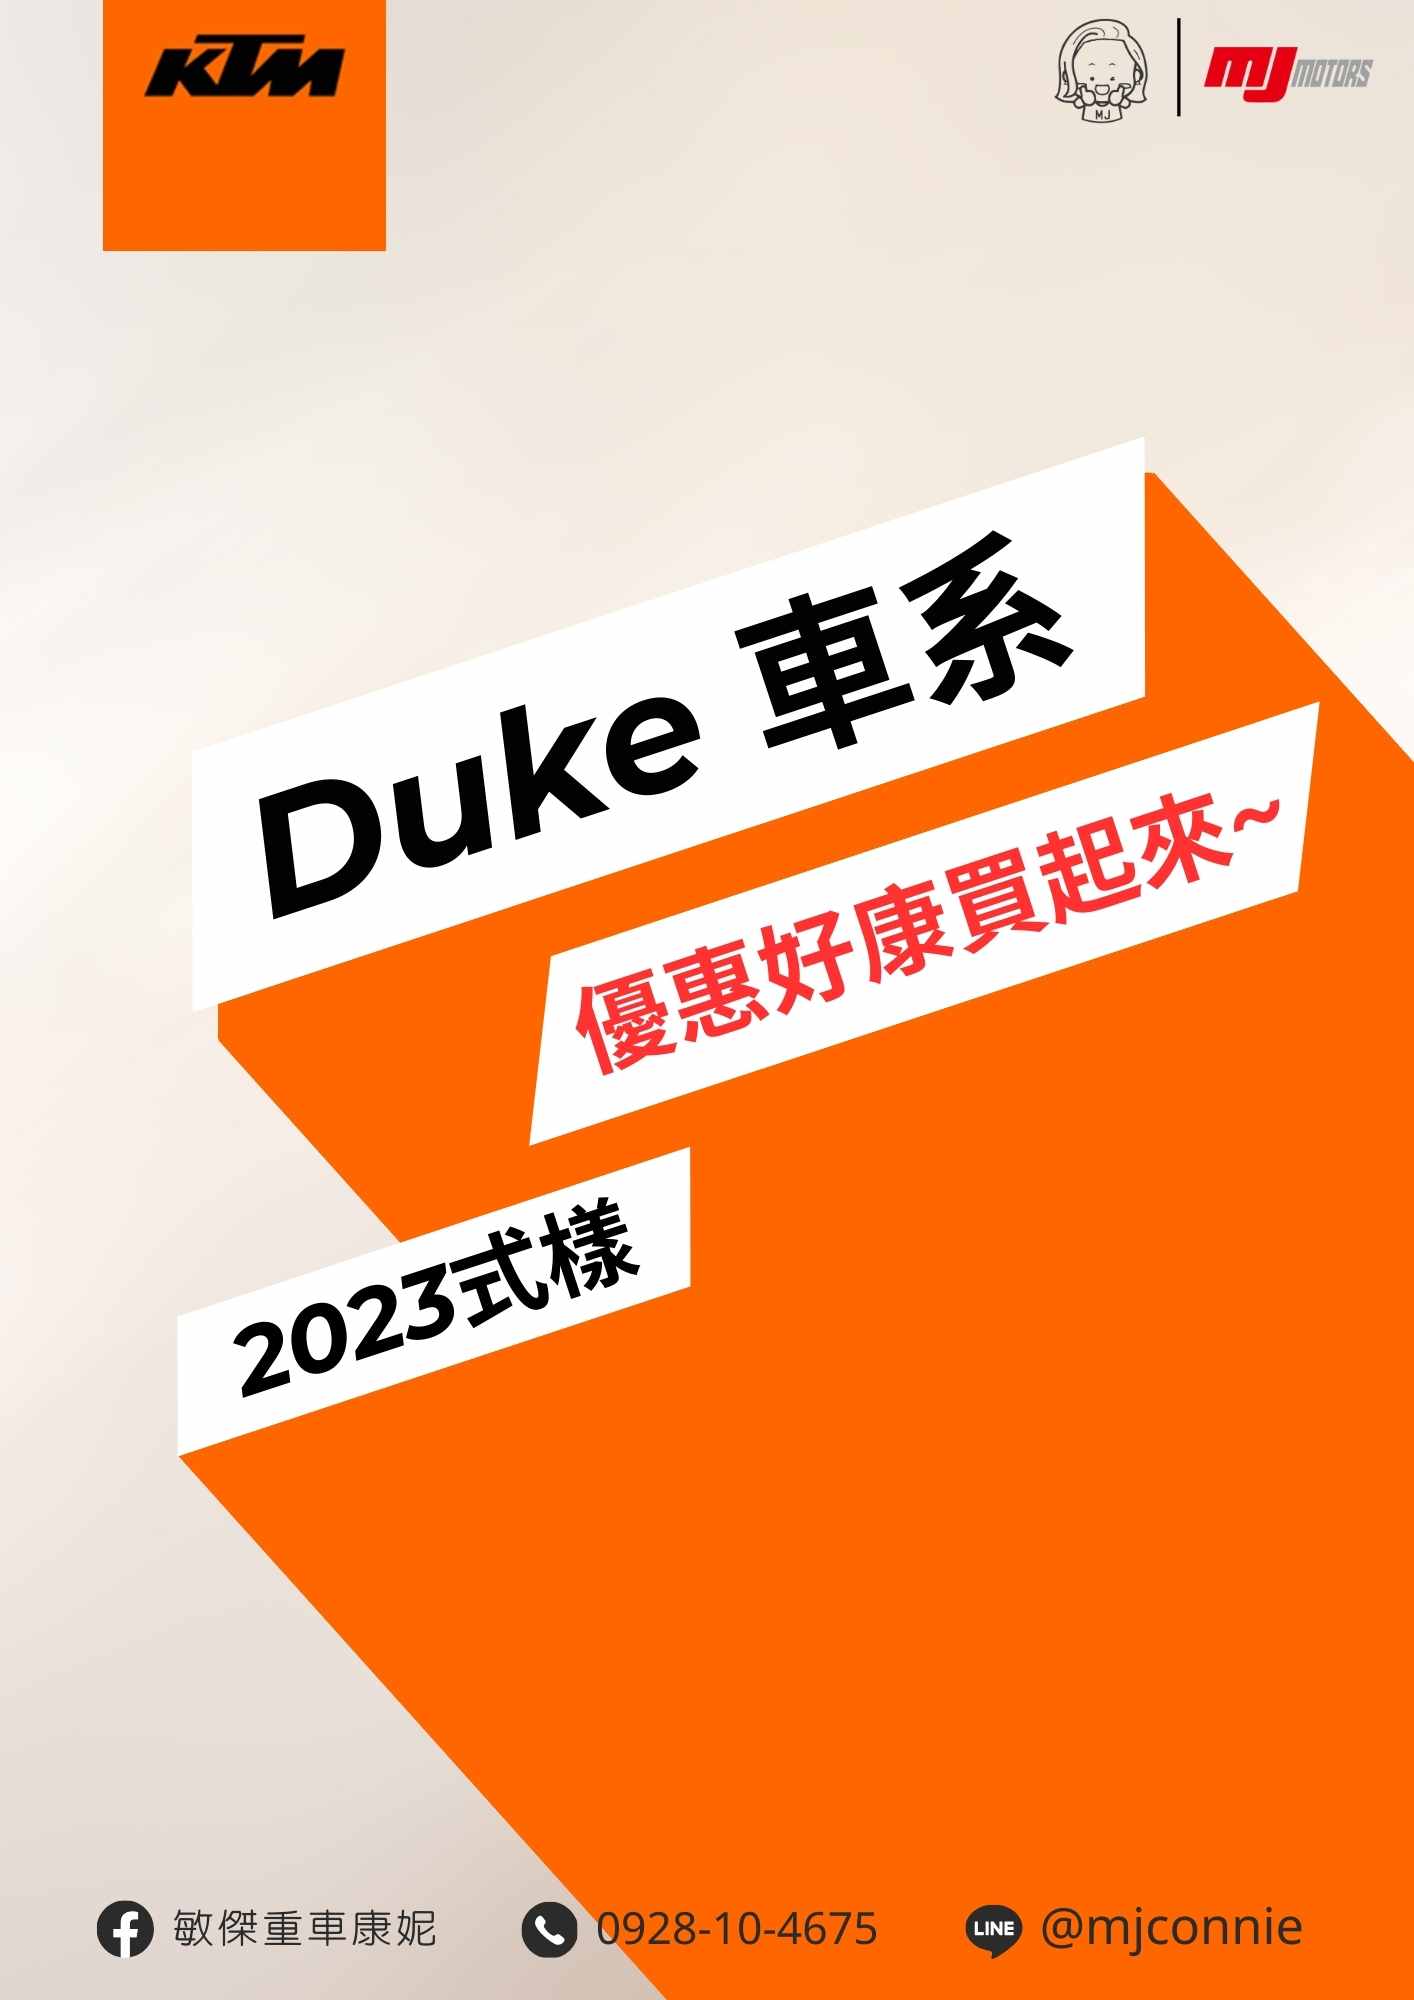 KTM 250DUKE新車出售中 『敏傑康妮』KTM Duke 車系 優惠方案在這裡  喜歡街車系列～康妮幫您整理好康優惠！ | 敏傑車業資深銷售專員 康妮 Connie